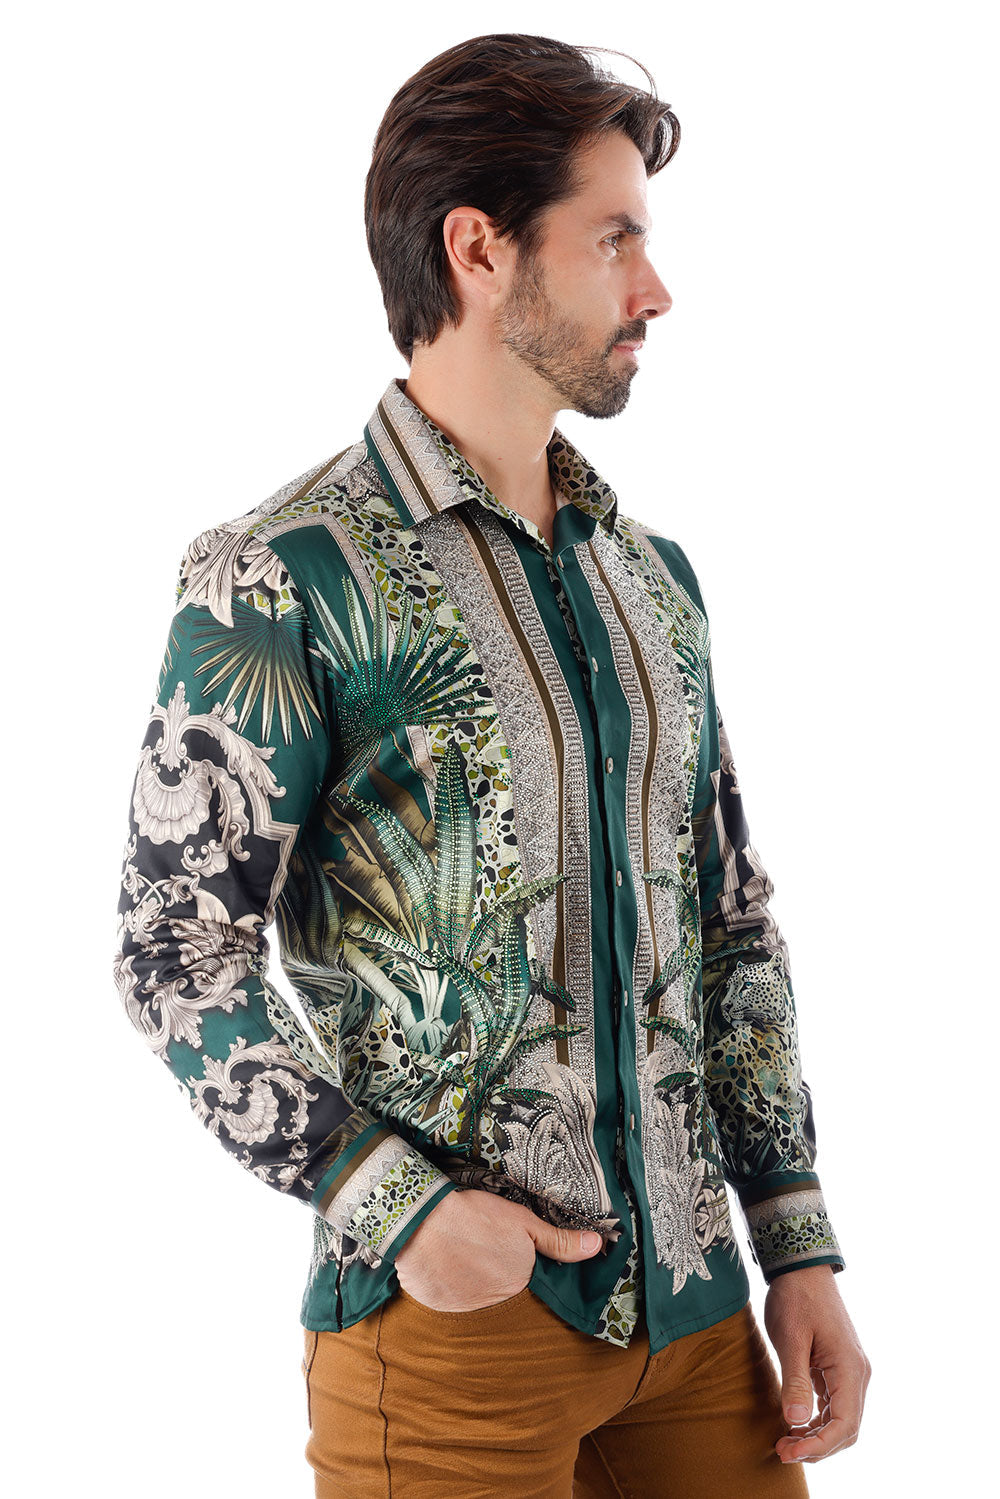 BARABAS Men's Rhinestone Floral Baroque Long Sleeve Shirts 3SPR437 Green